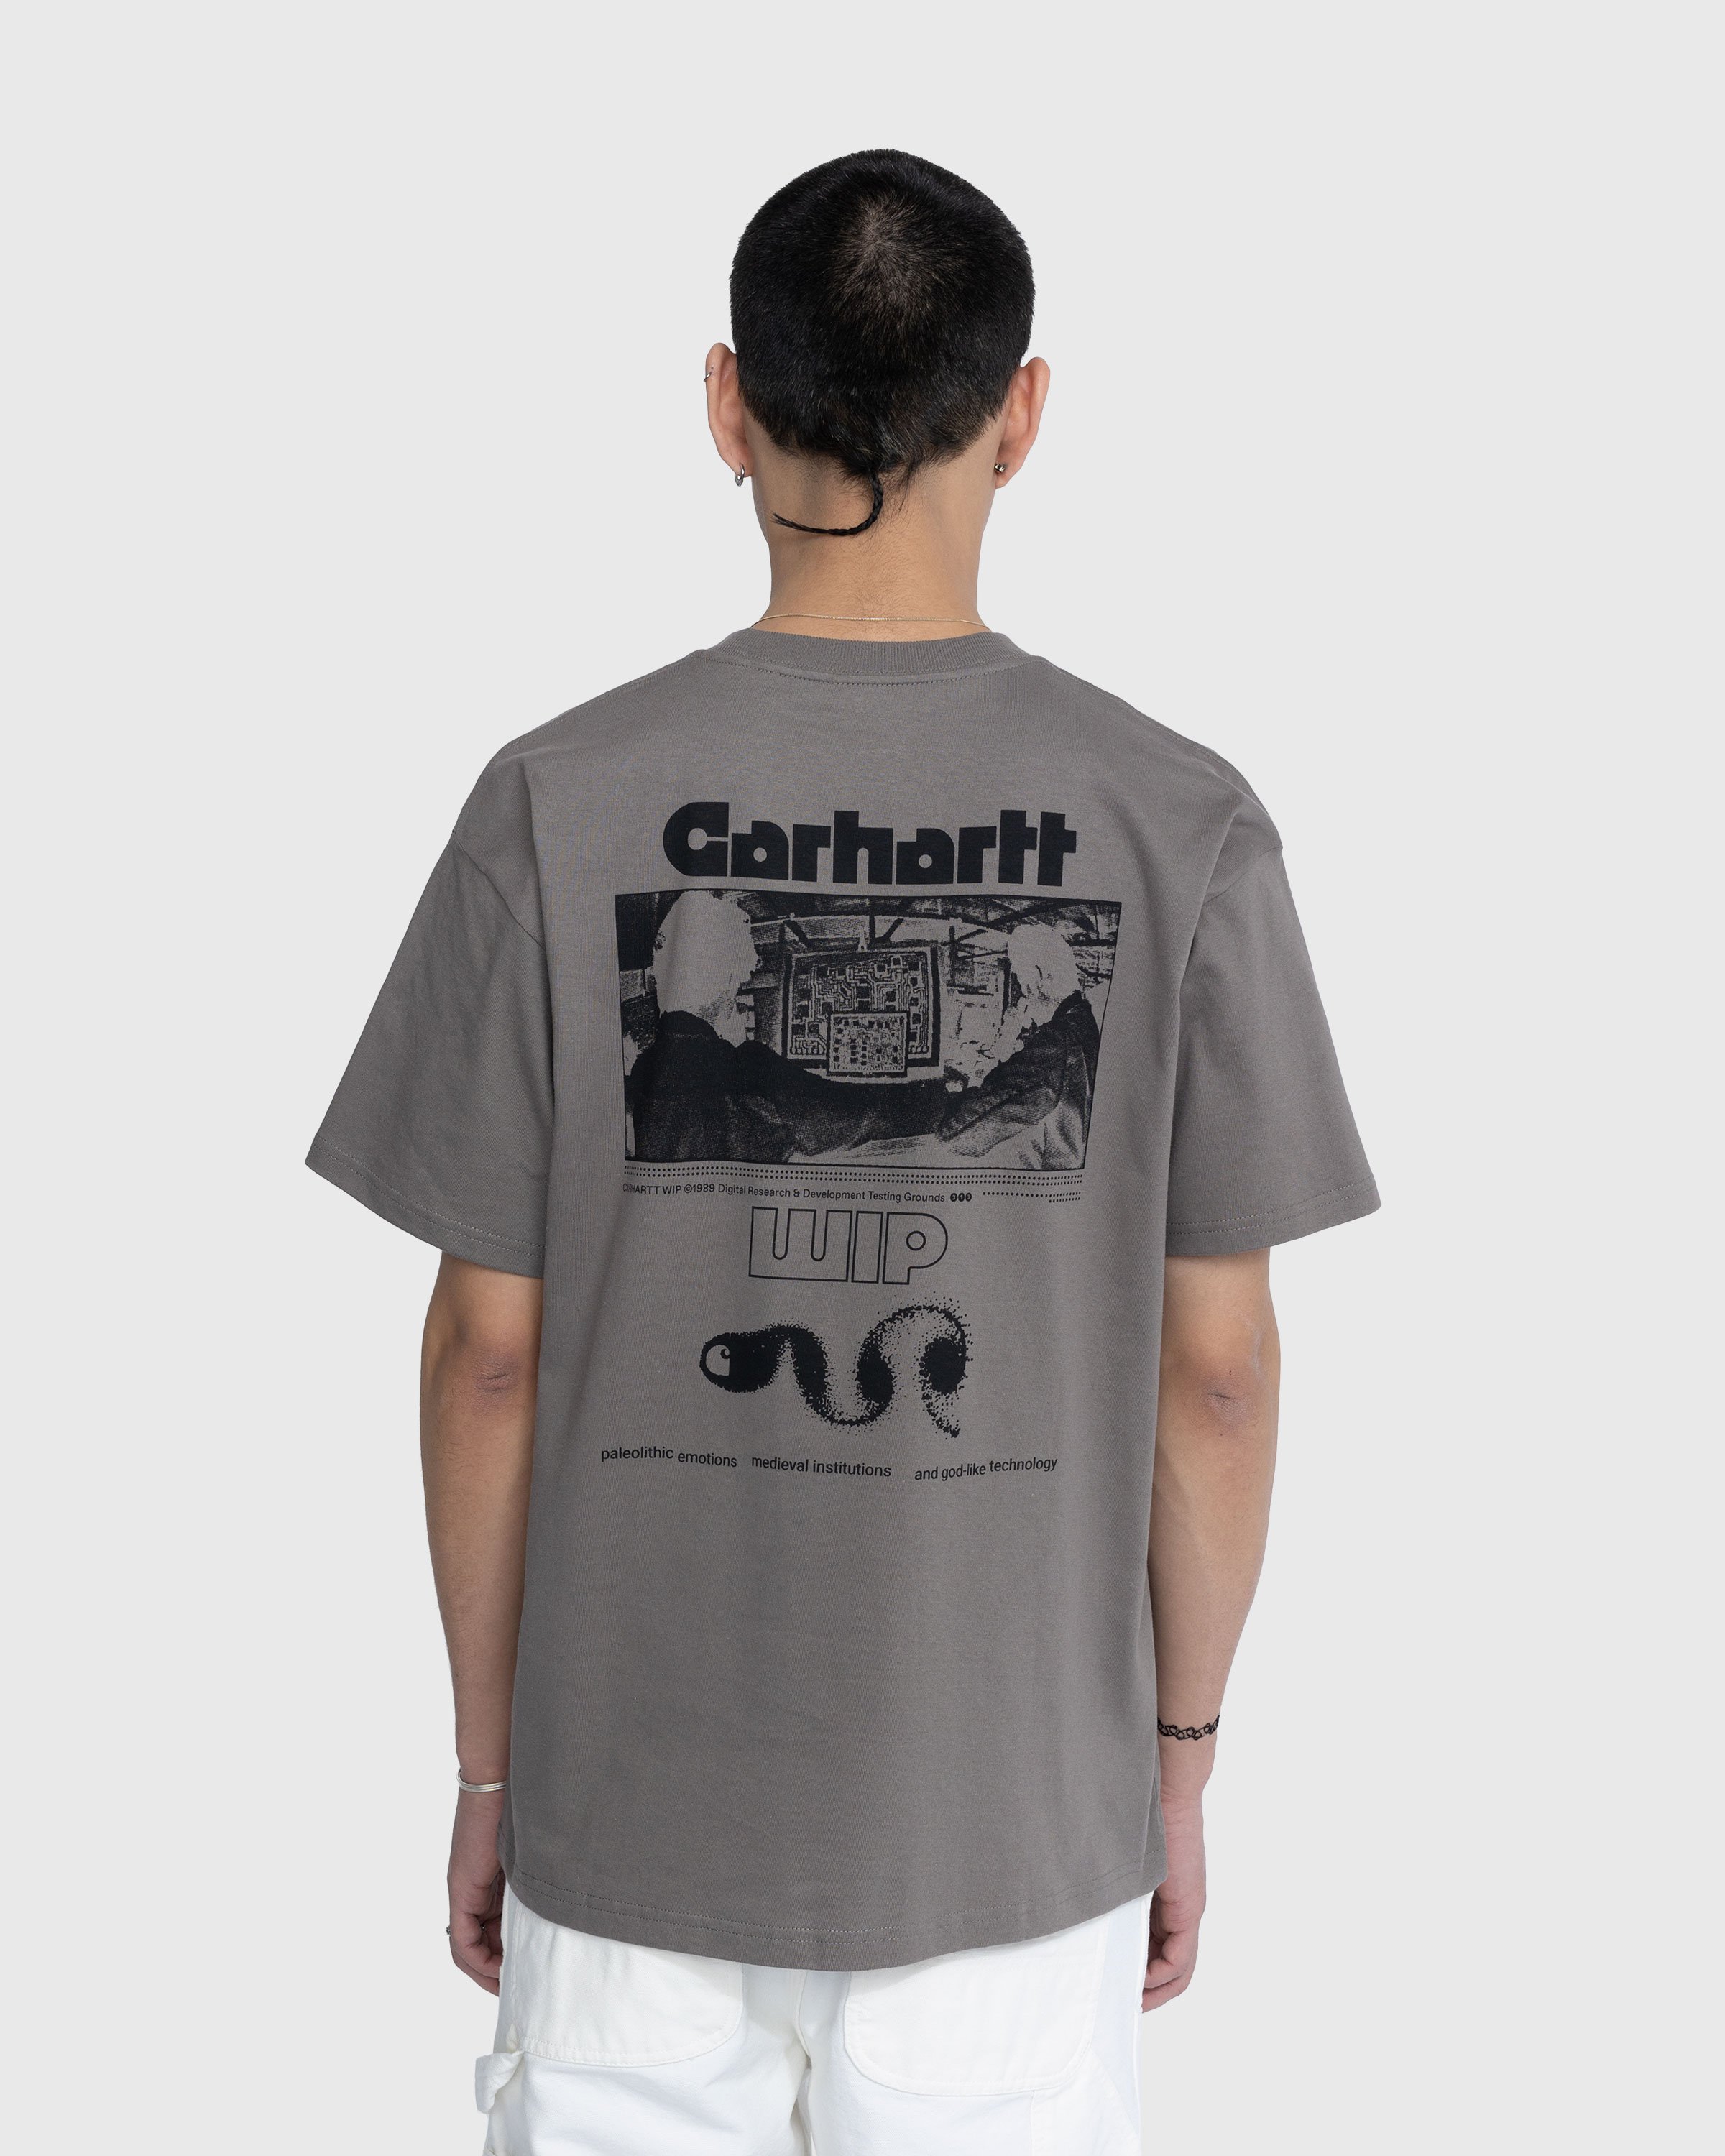 Carhartt WIP - Innovation Pocket T-Shirt Teide - Clothing - Green - Image 4